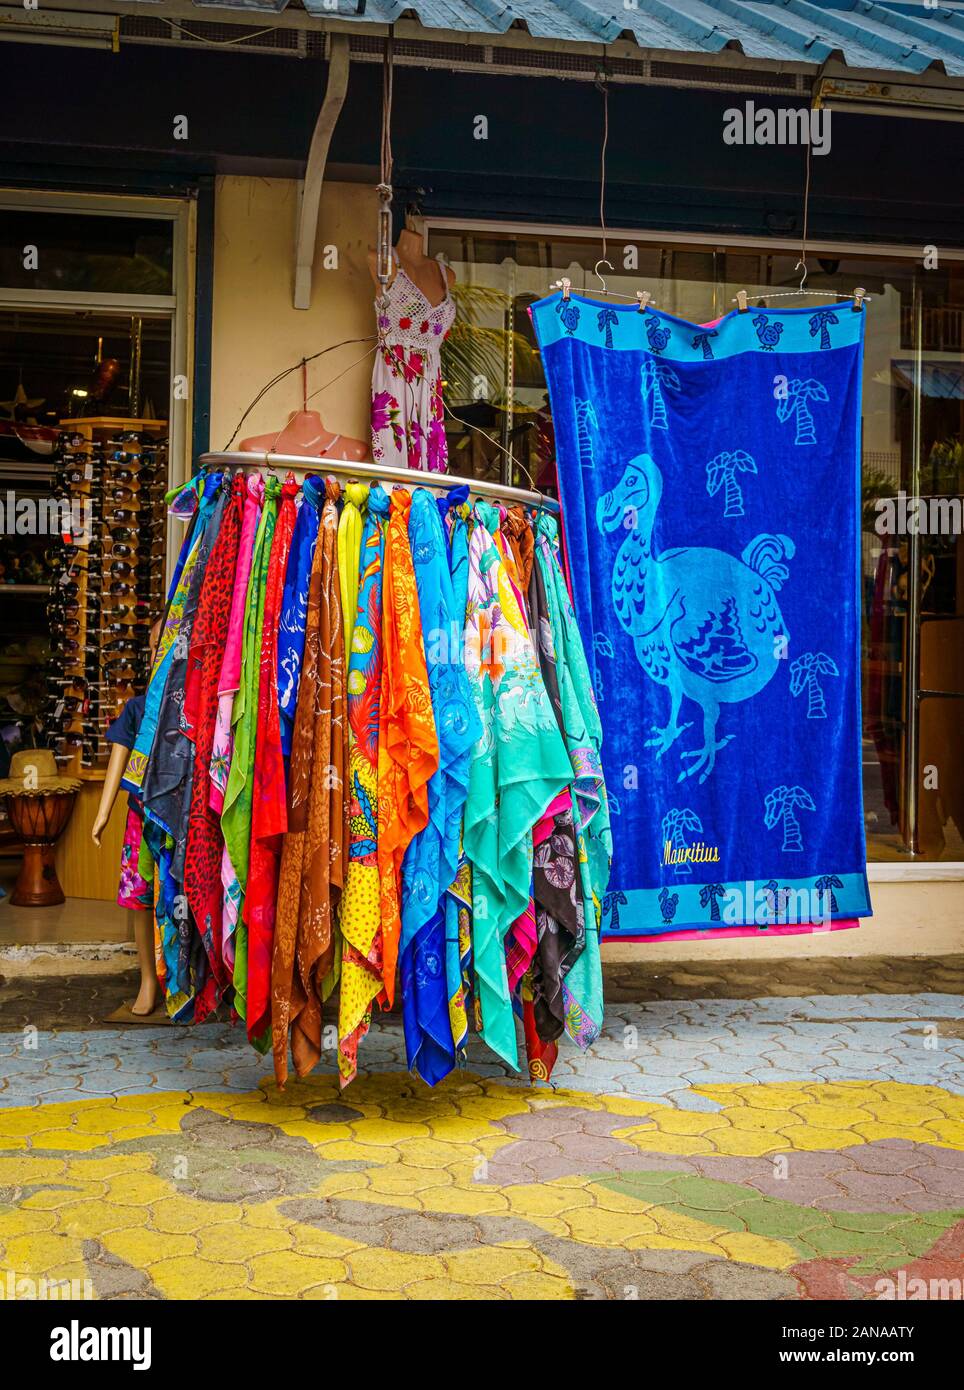 Mauritius, Dec 2015 - Souvenir shop displays pareos, towels and local crafts for sale Stock Photo